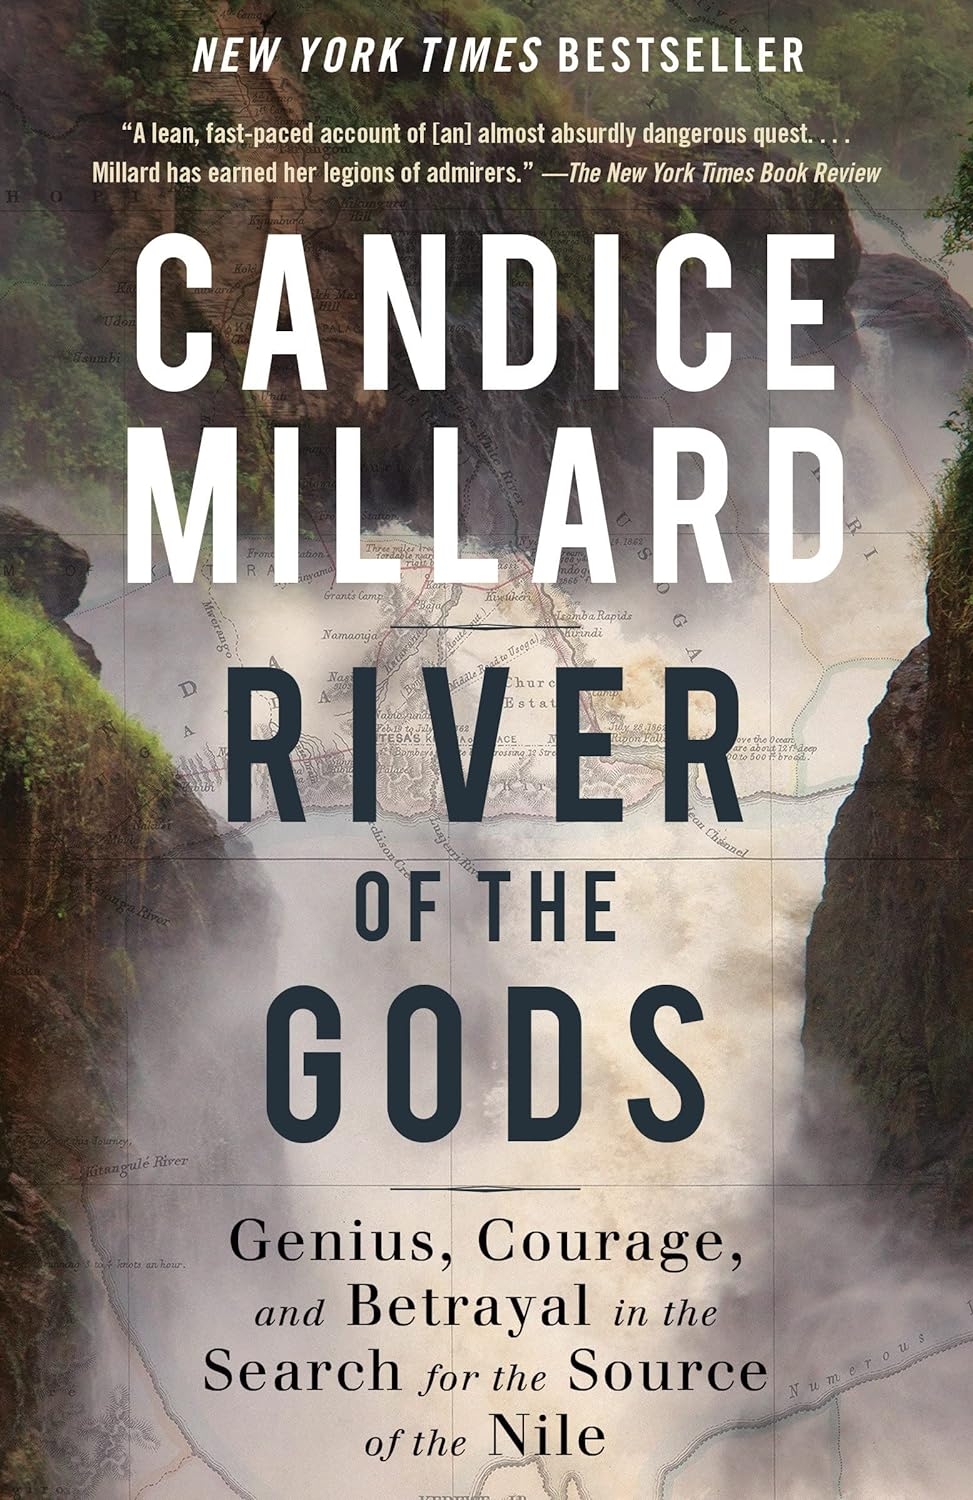 River of Gods by Candice Millard